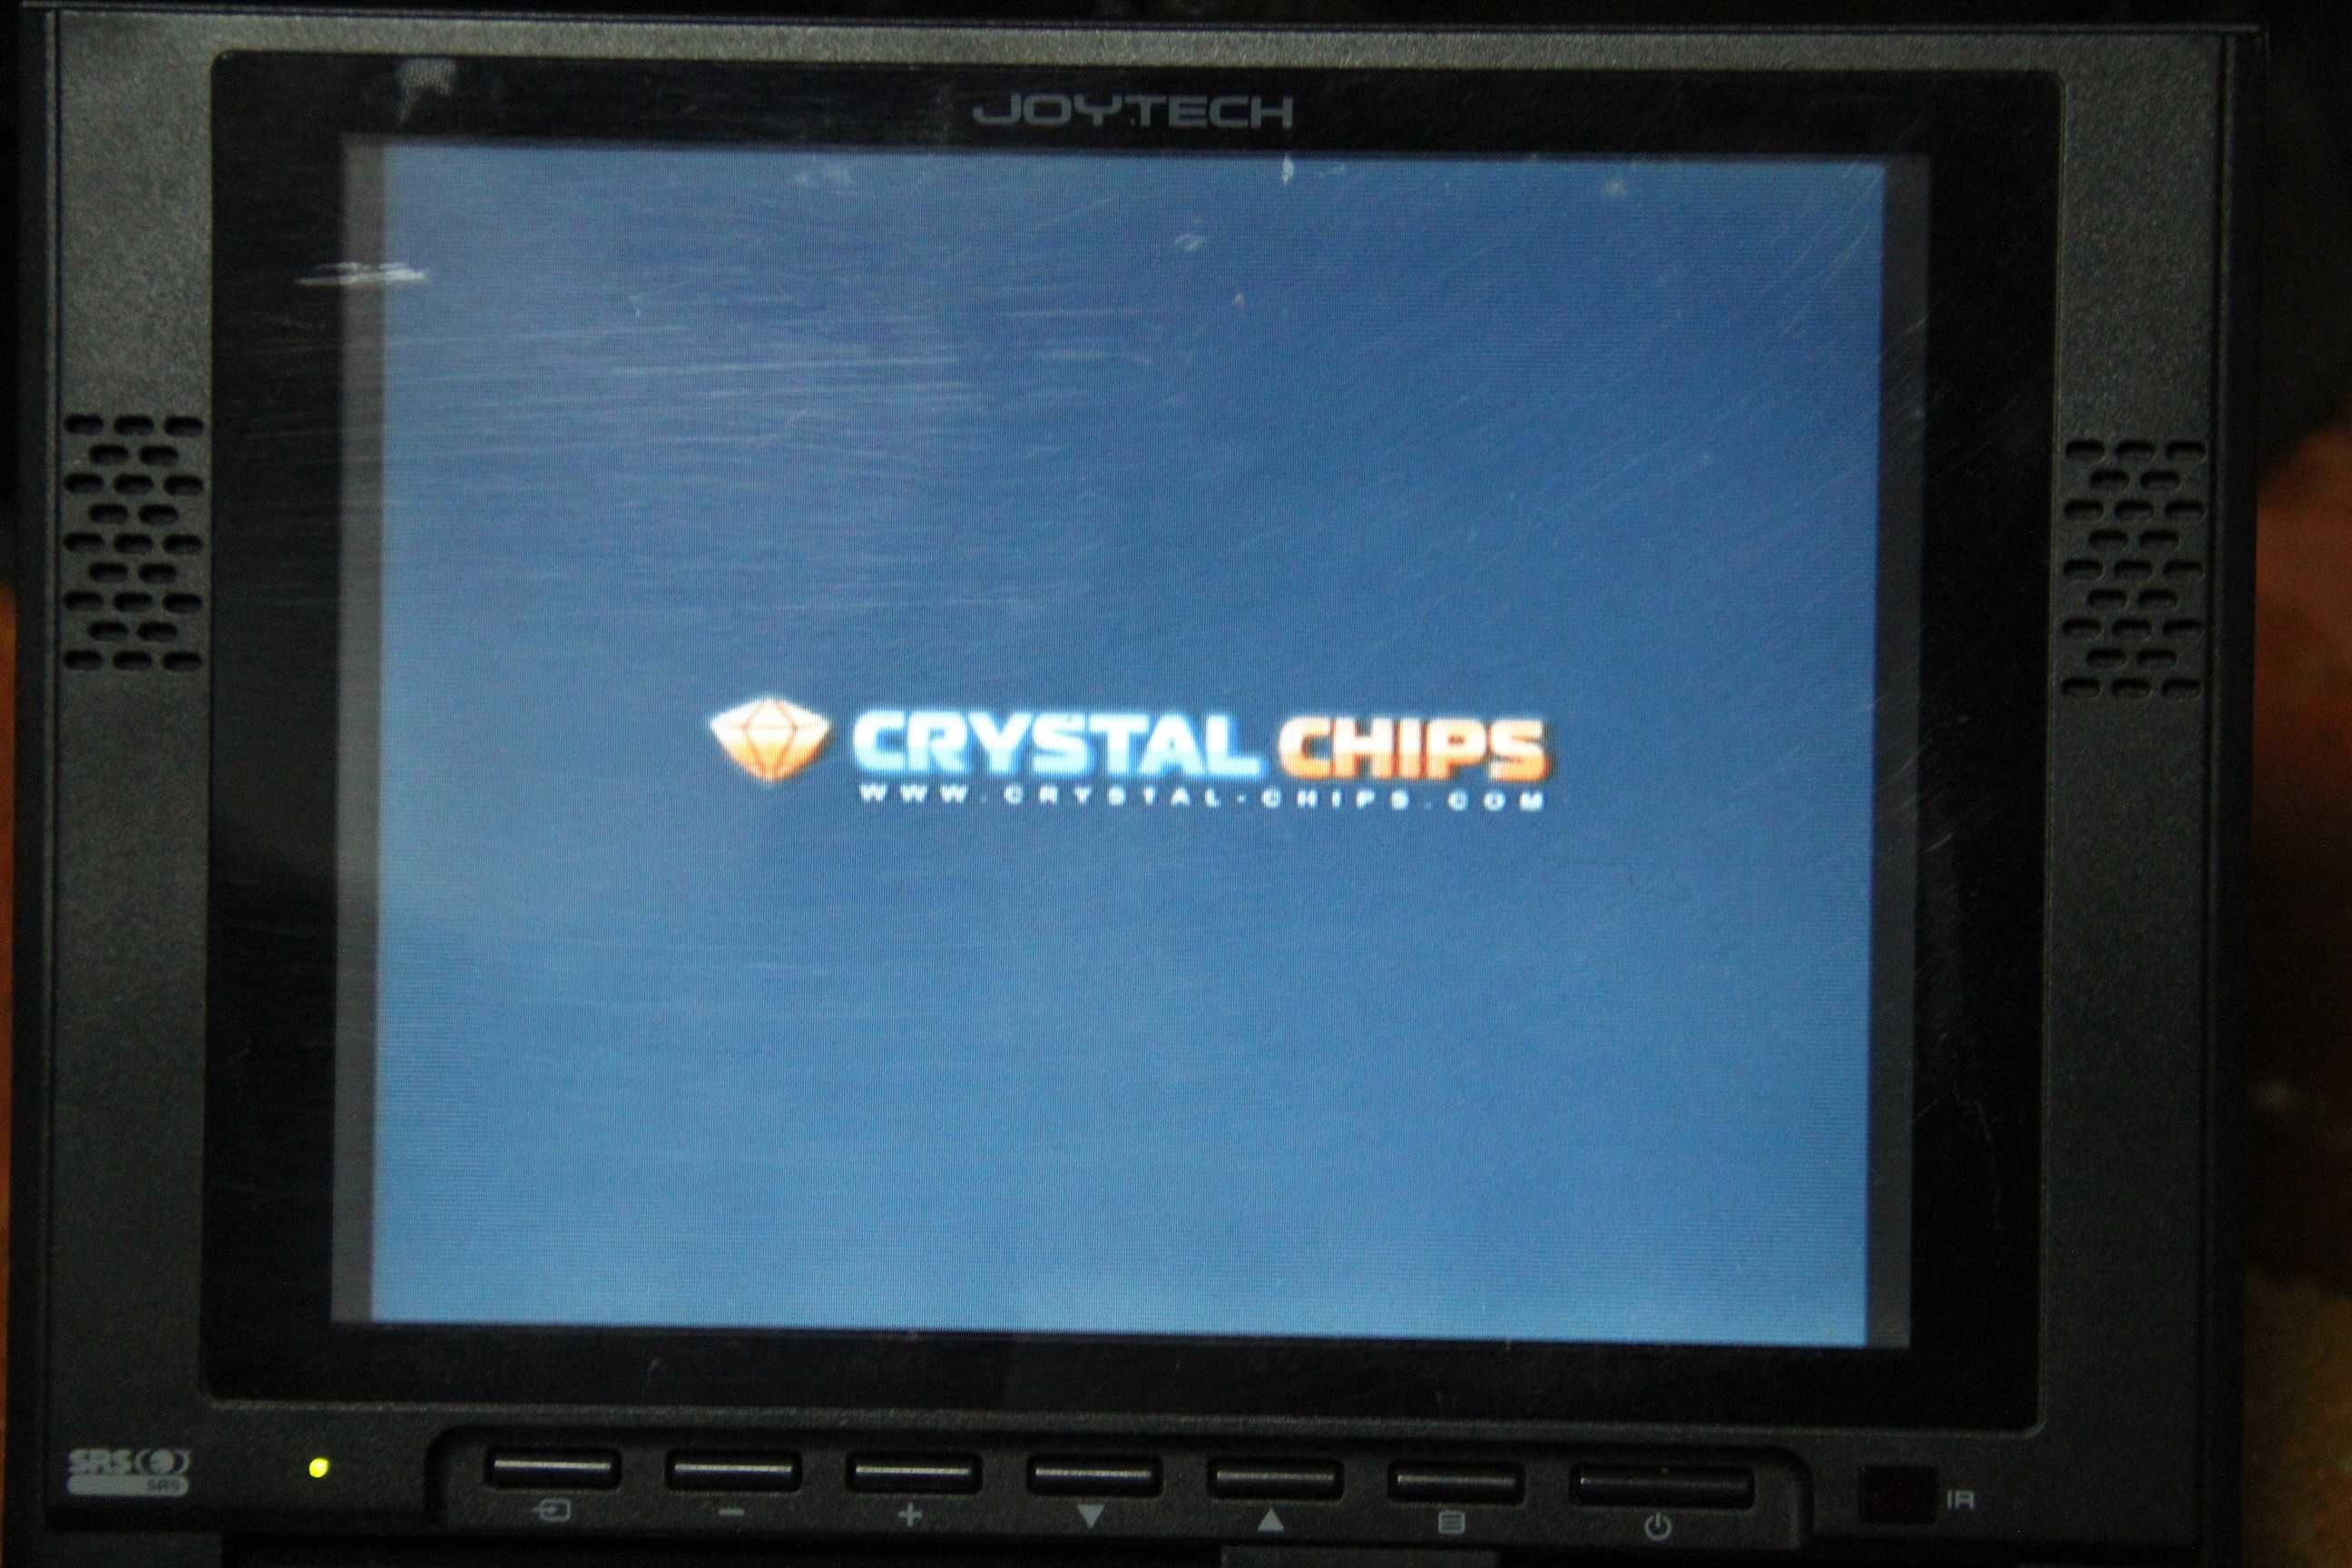 PS2 slim 77004 + CRYSTAL CHIP + LCD JOYTECH 8" + acessórios